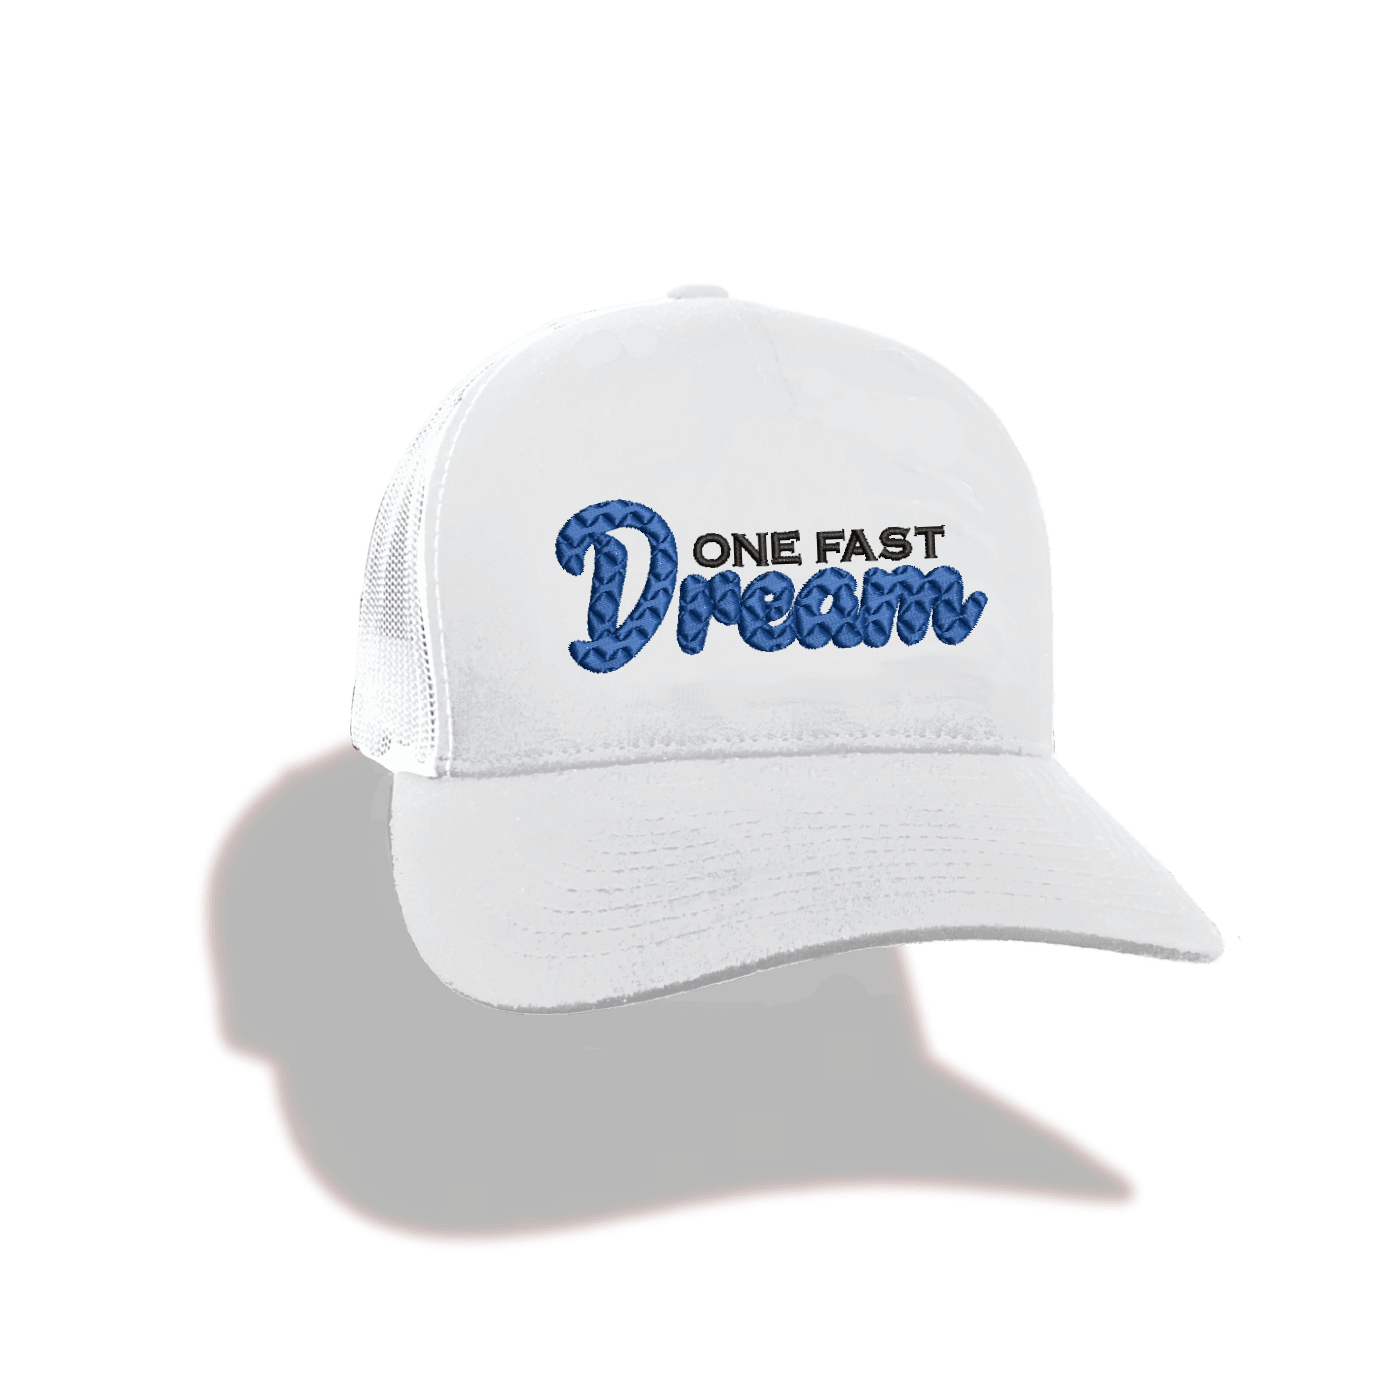 One Fast Dream Retro Trucker Hat